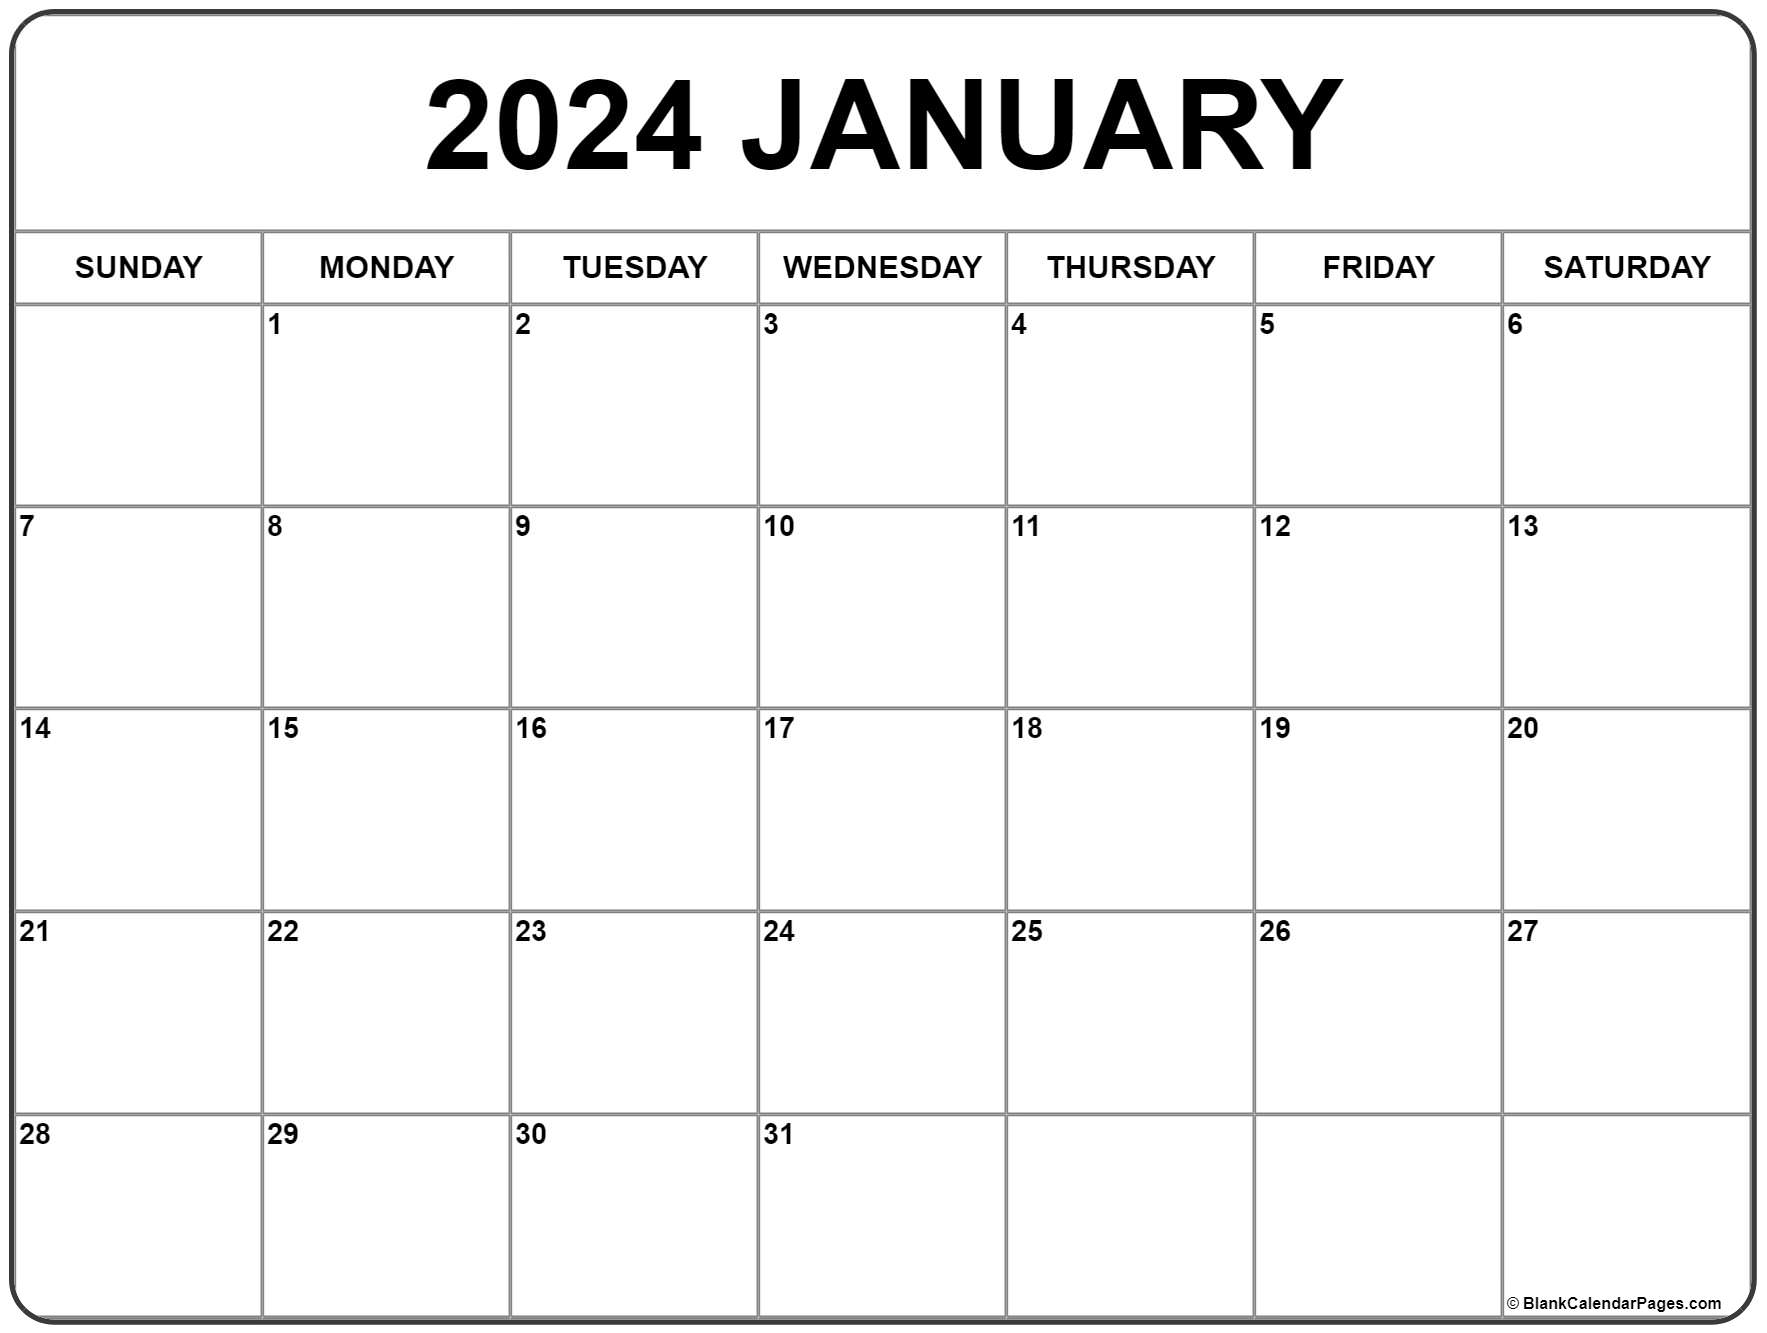 January 2022 Schedule January 2022 Calendar | Free Printable Calendar Templates